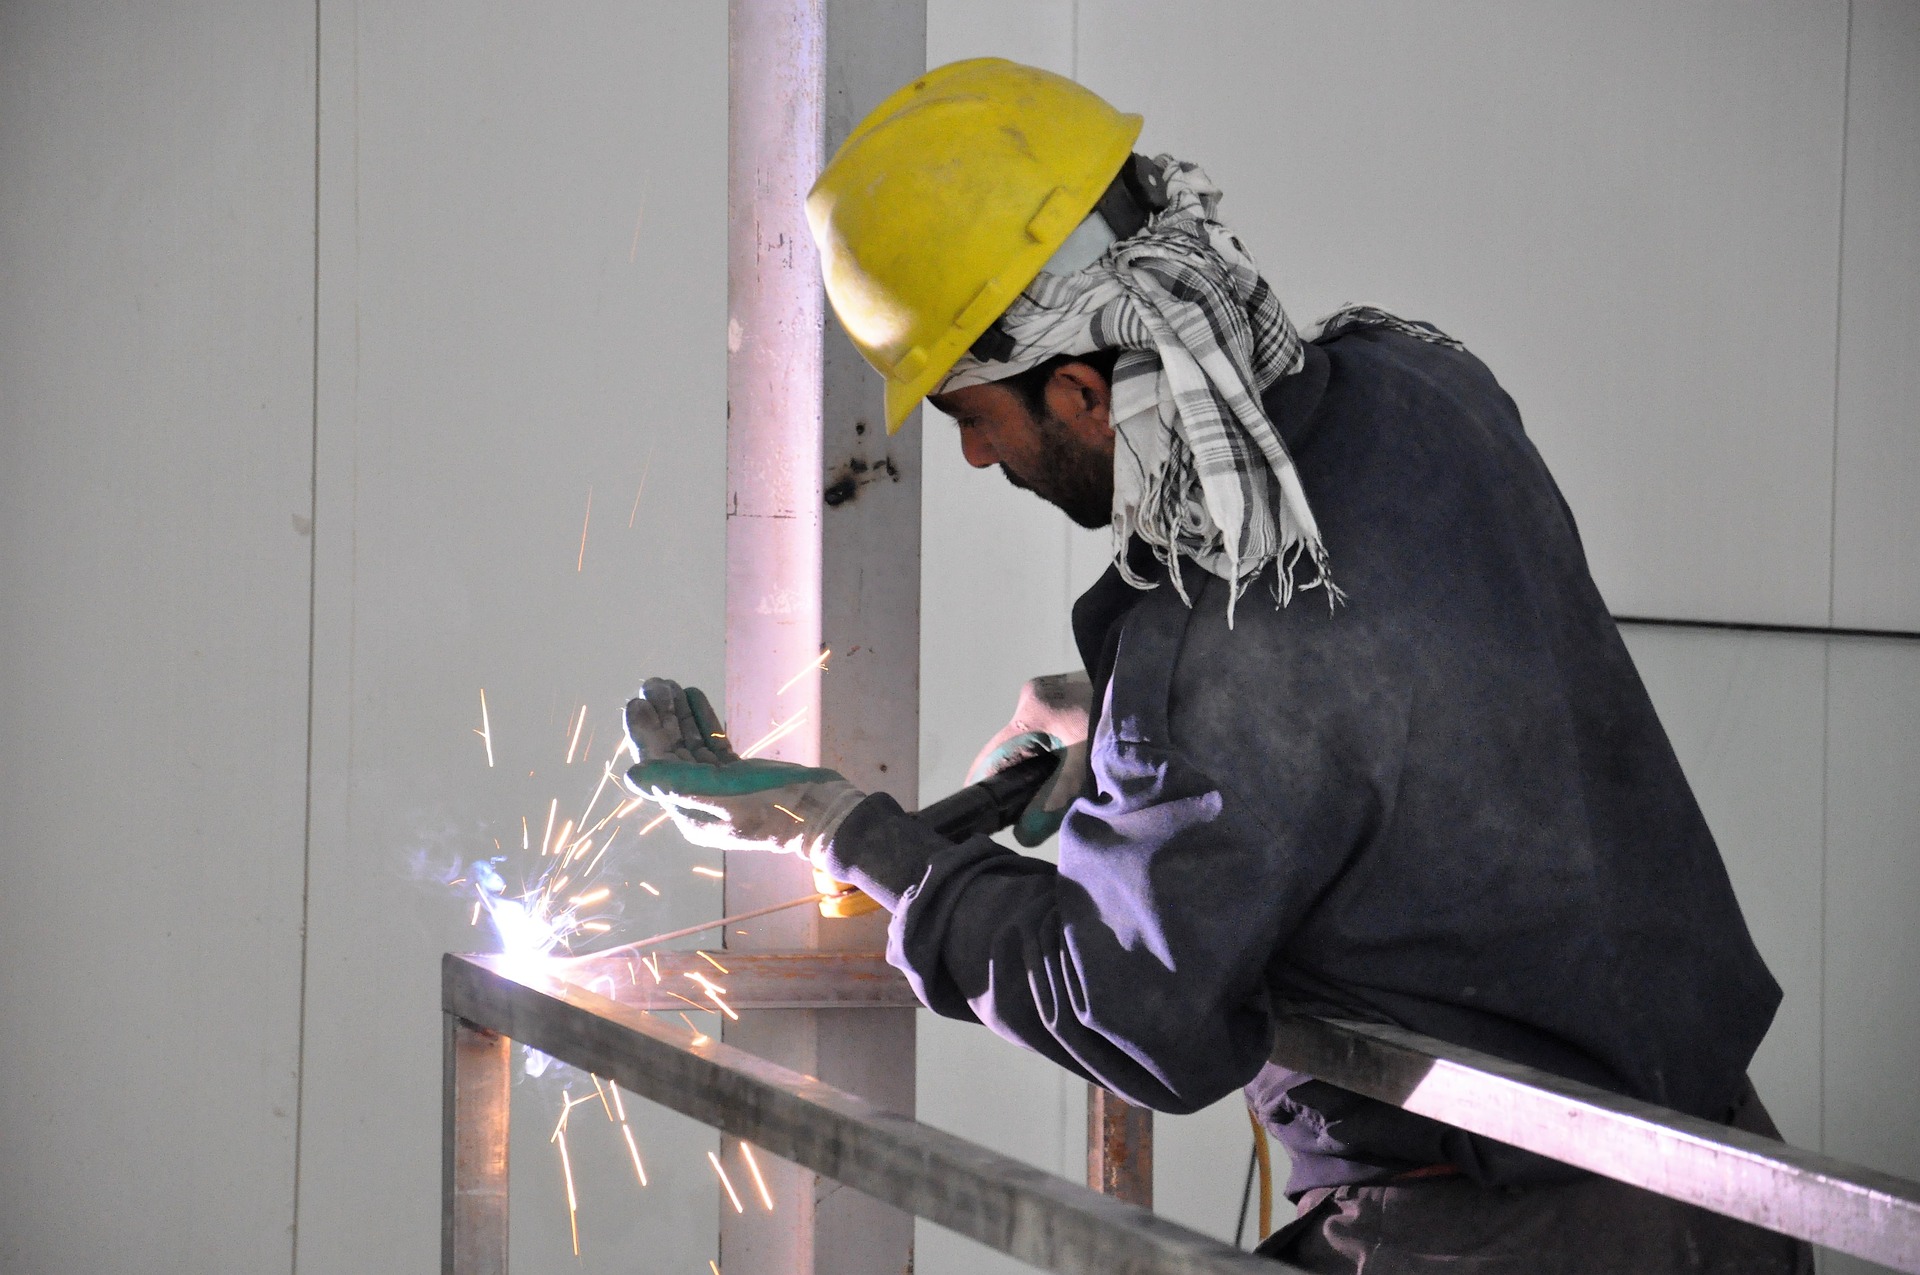 welding fabrication service price